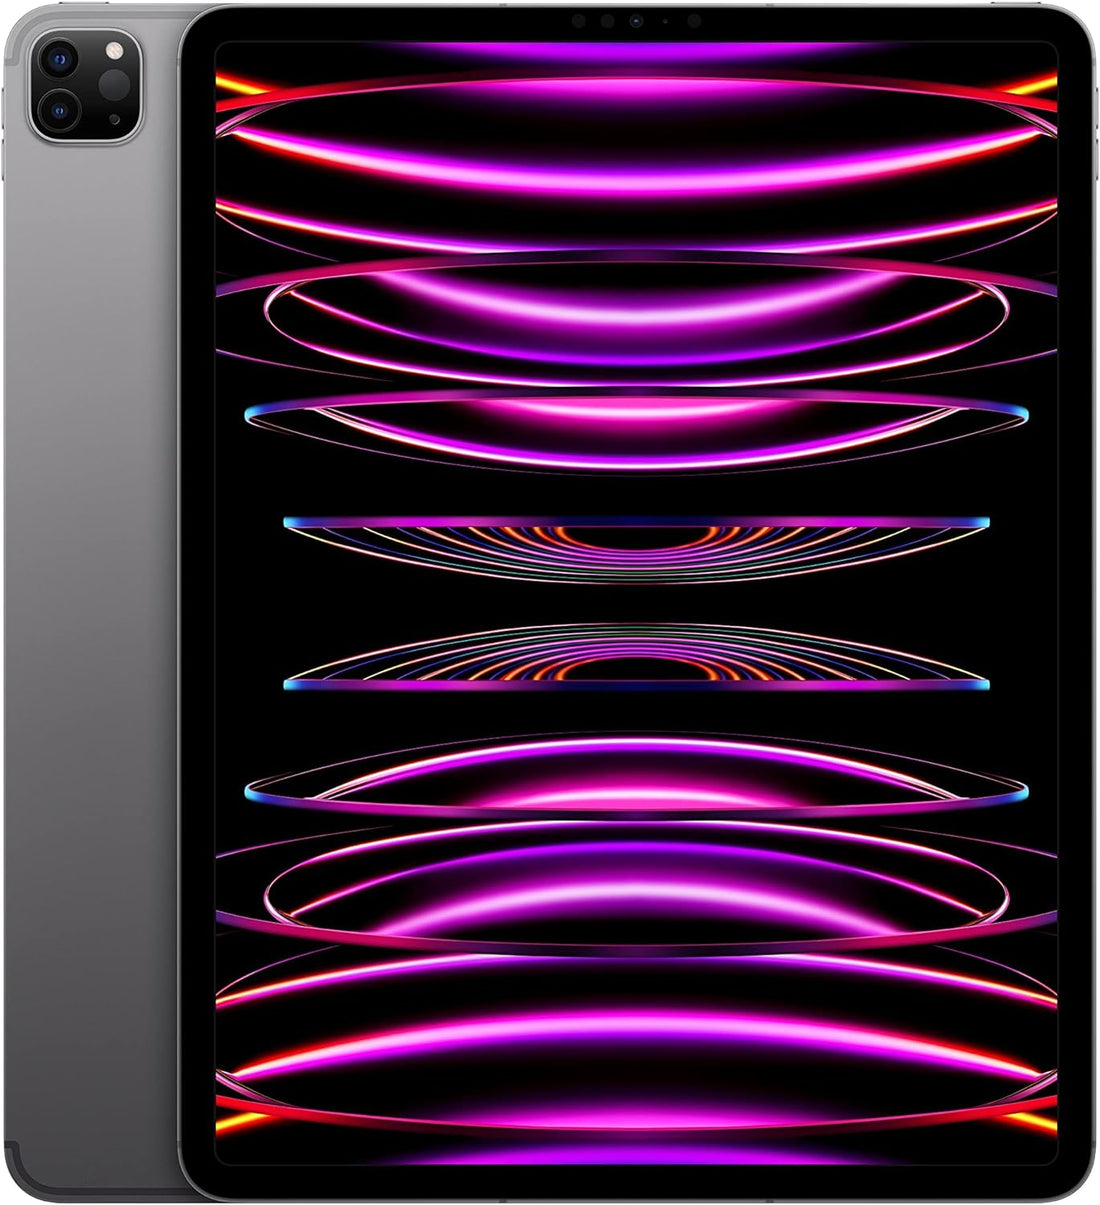 Apple iPad Pro 12.9-inch (6th Gen) 1TB, WIFI + Unlocked Cellular - Space Gray (Certified Refurbished)